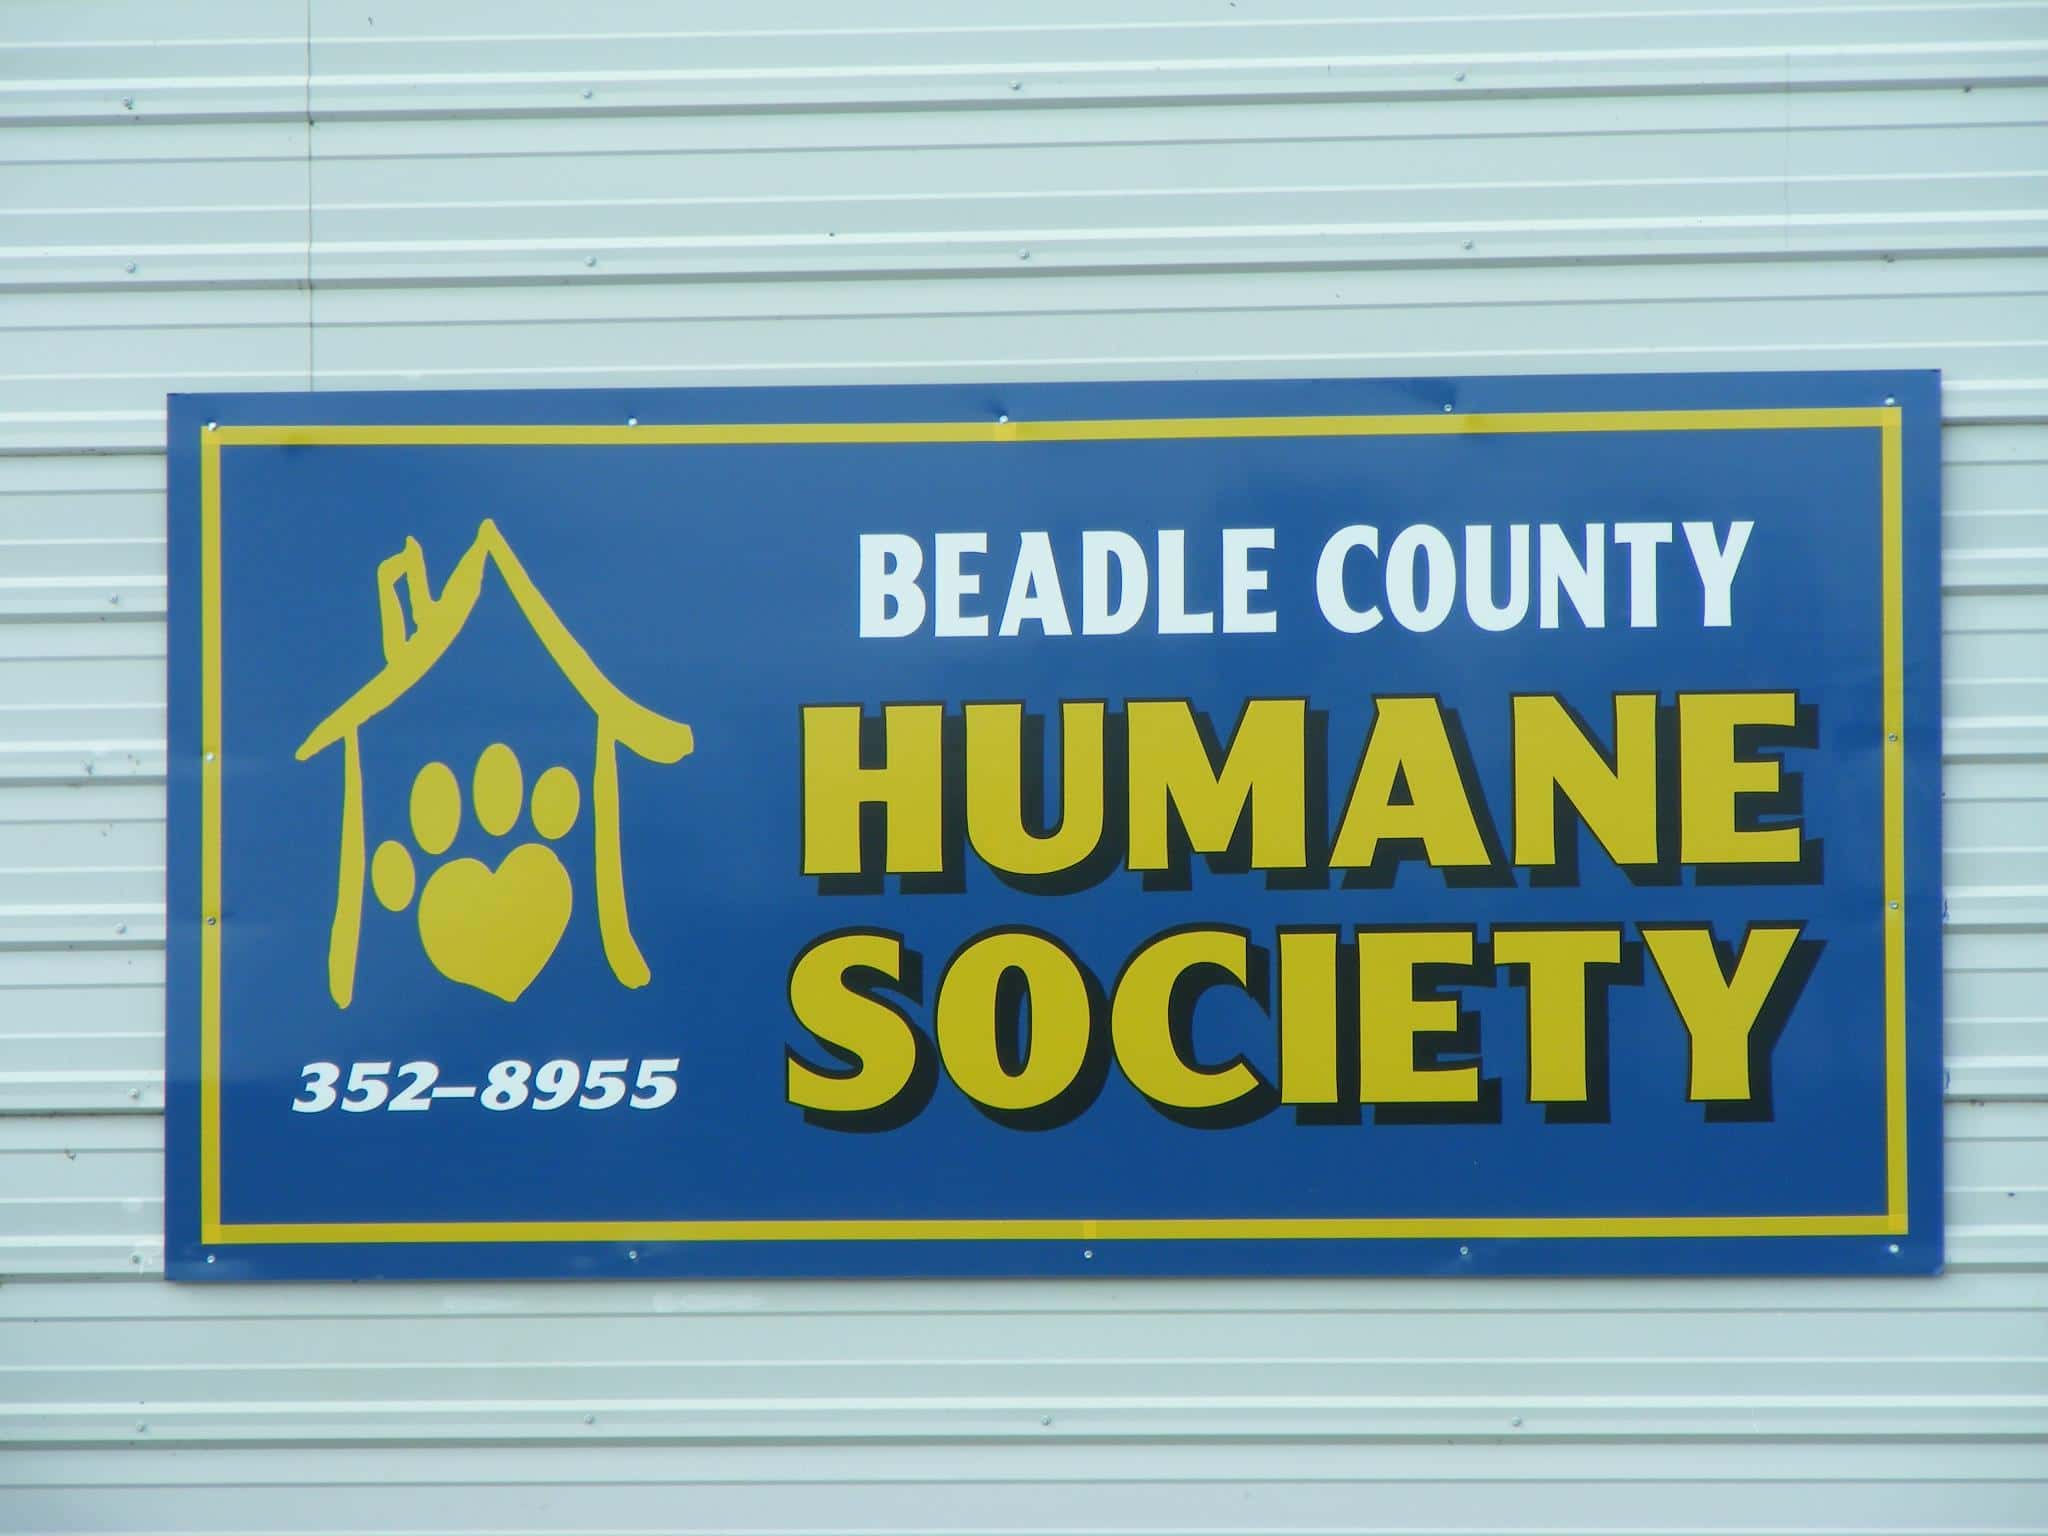 Beadle county humane society siddharth sanca cognizant